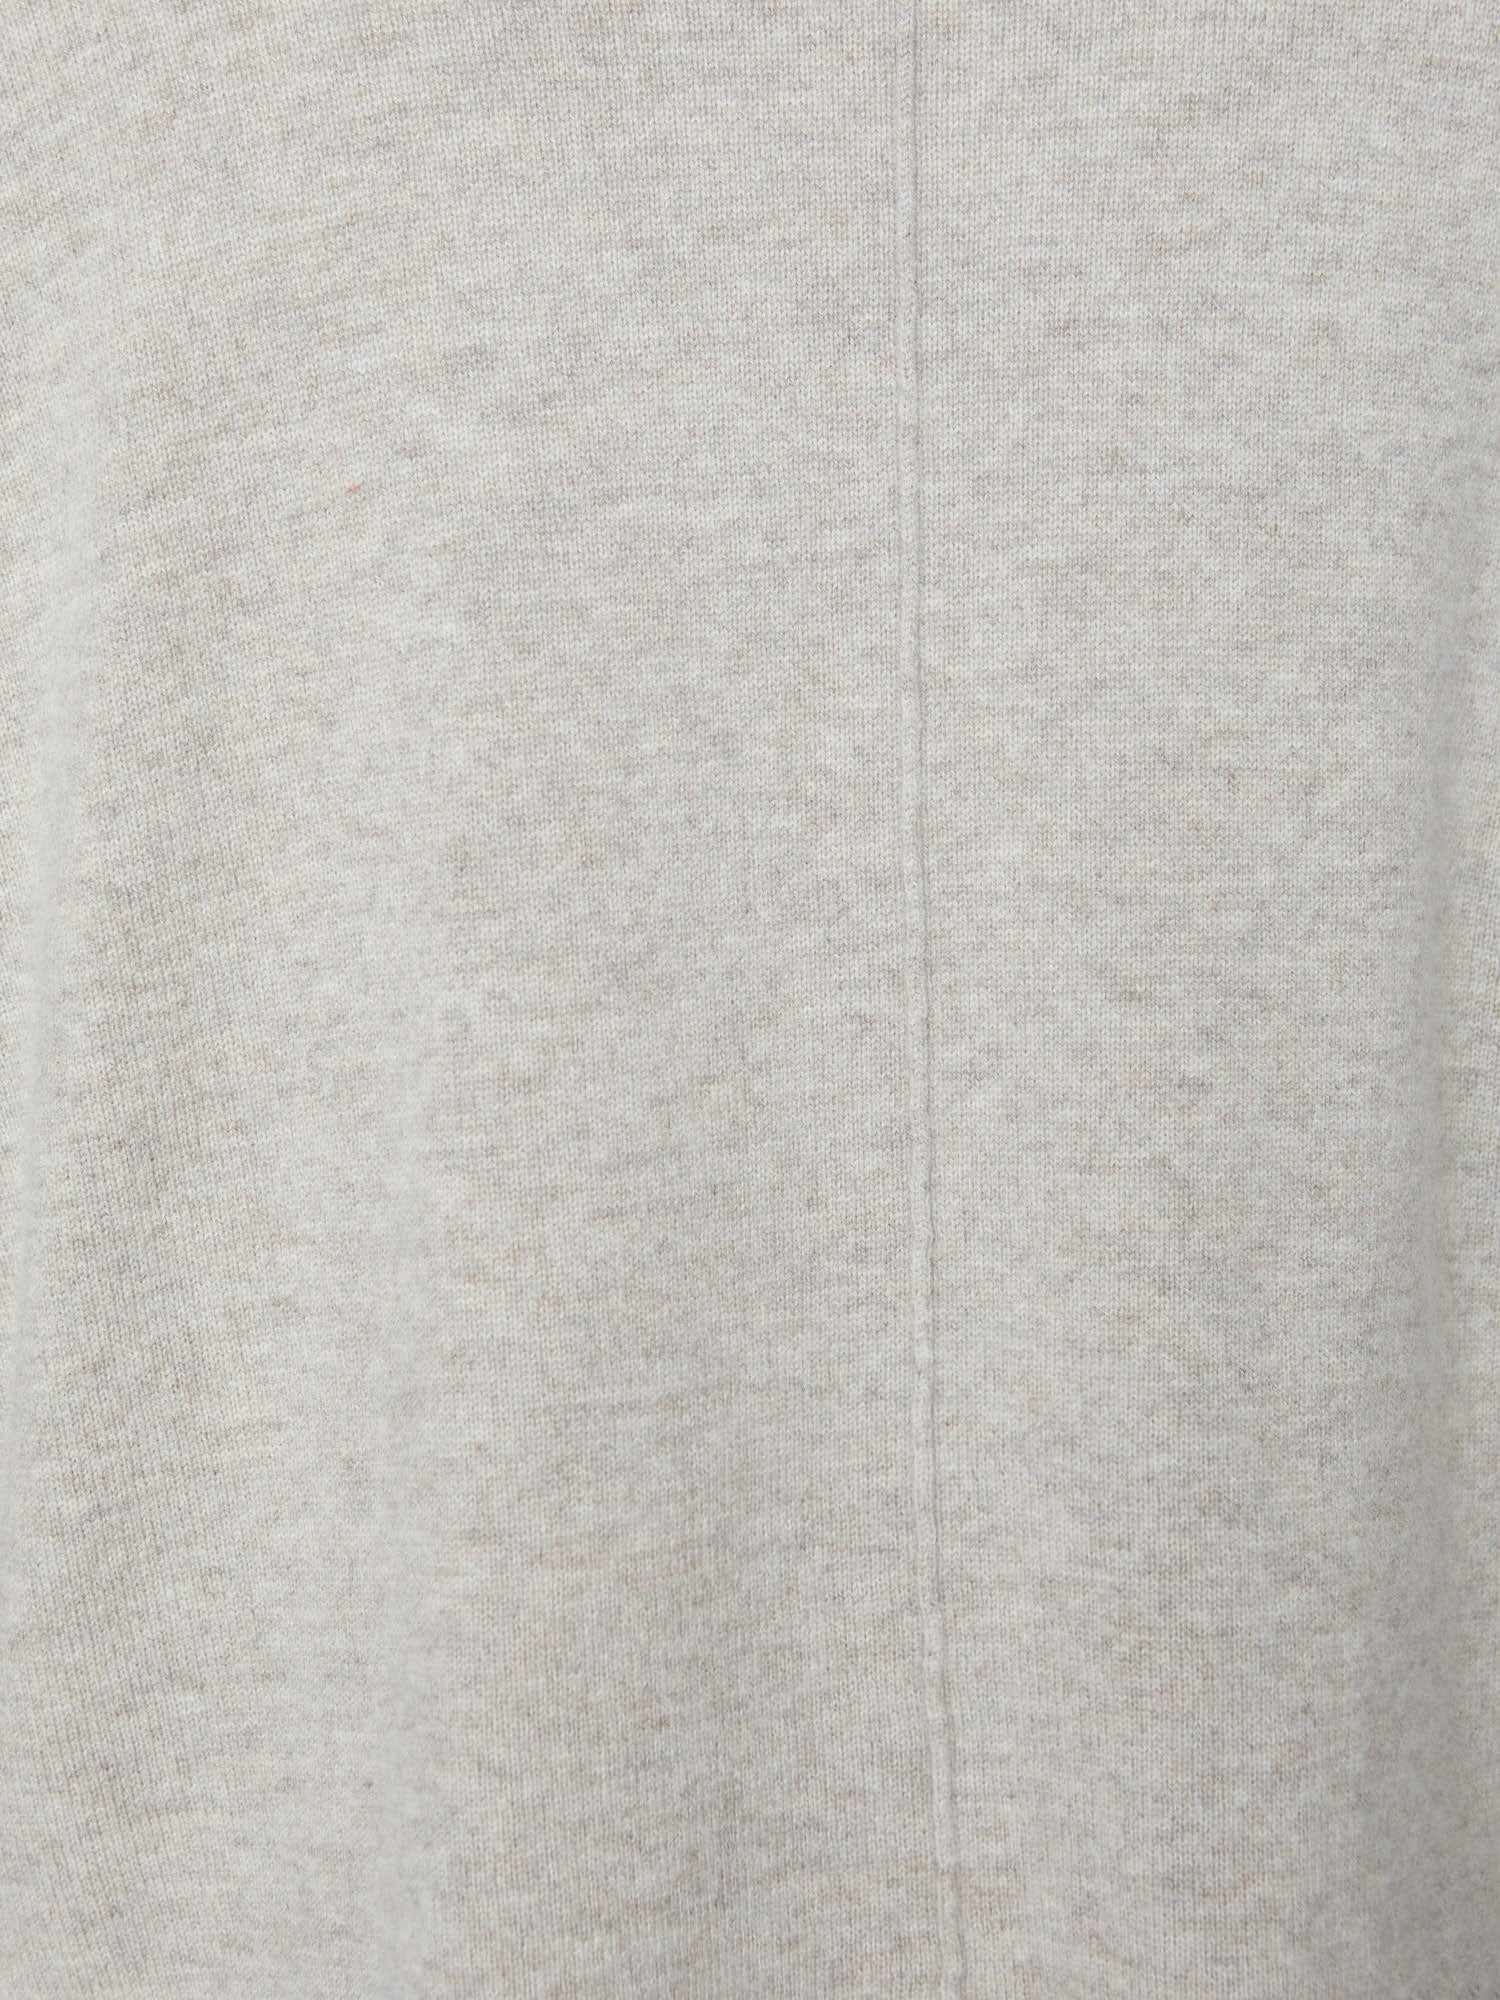 Halo light grey cashmere wool cardigan sweater close up 2